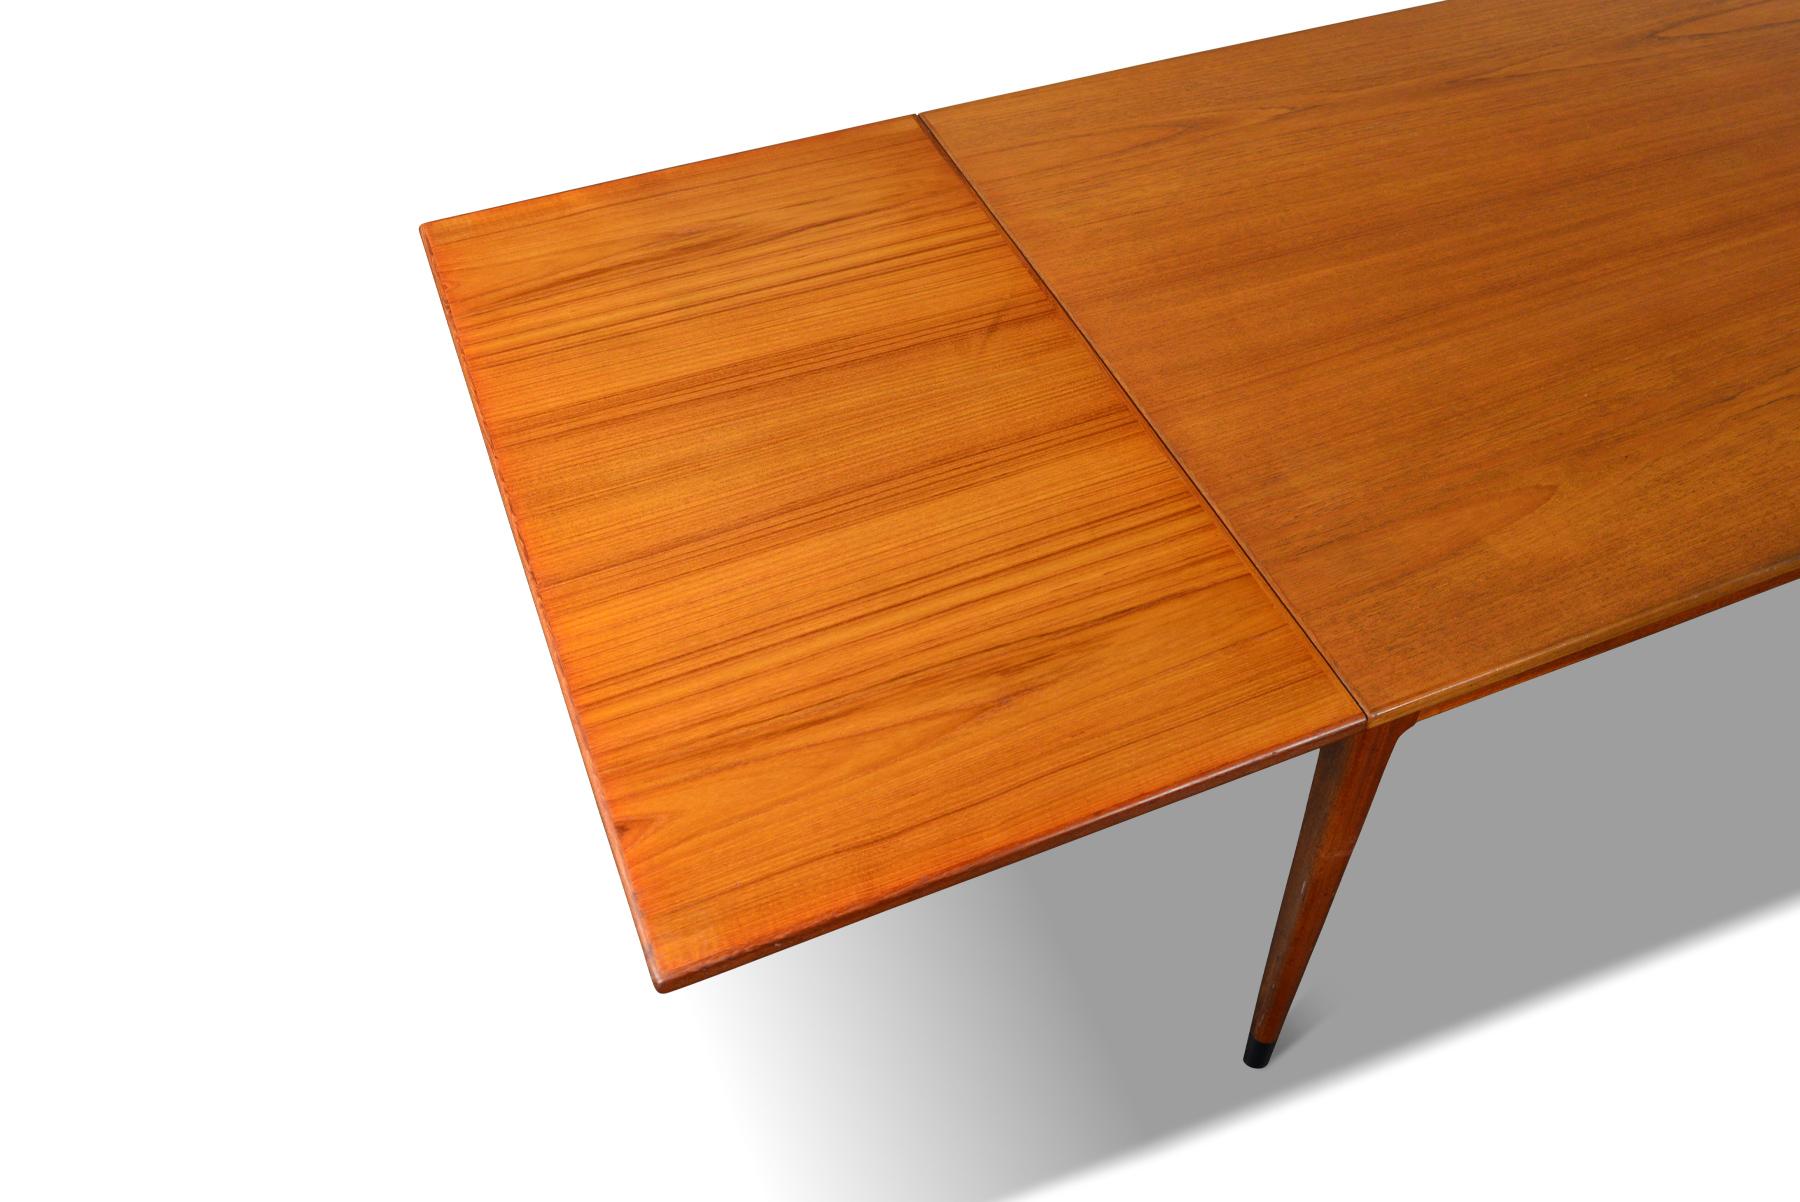 20th Century Danish Modern Rectangular Draw Leaf Mid Century Dining Table in Teak